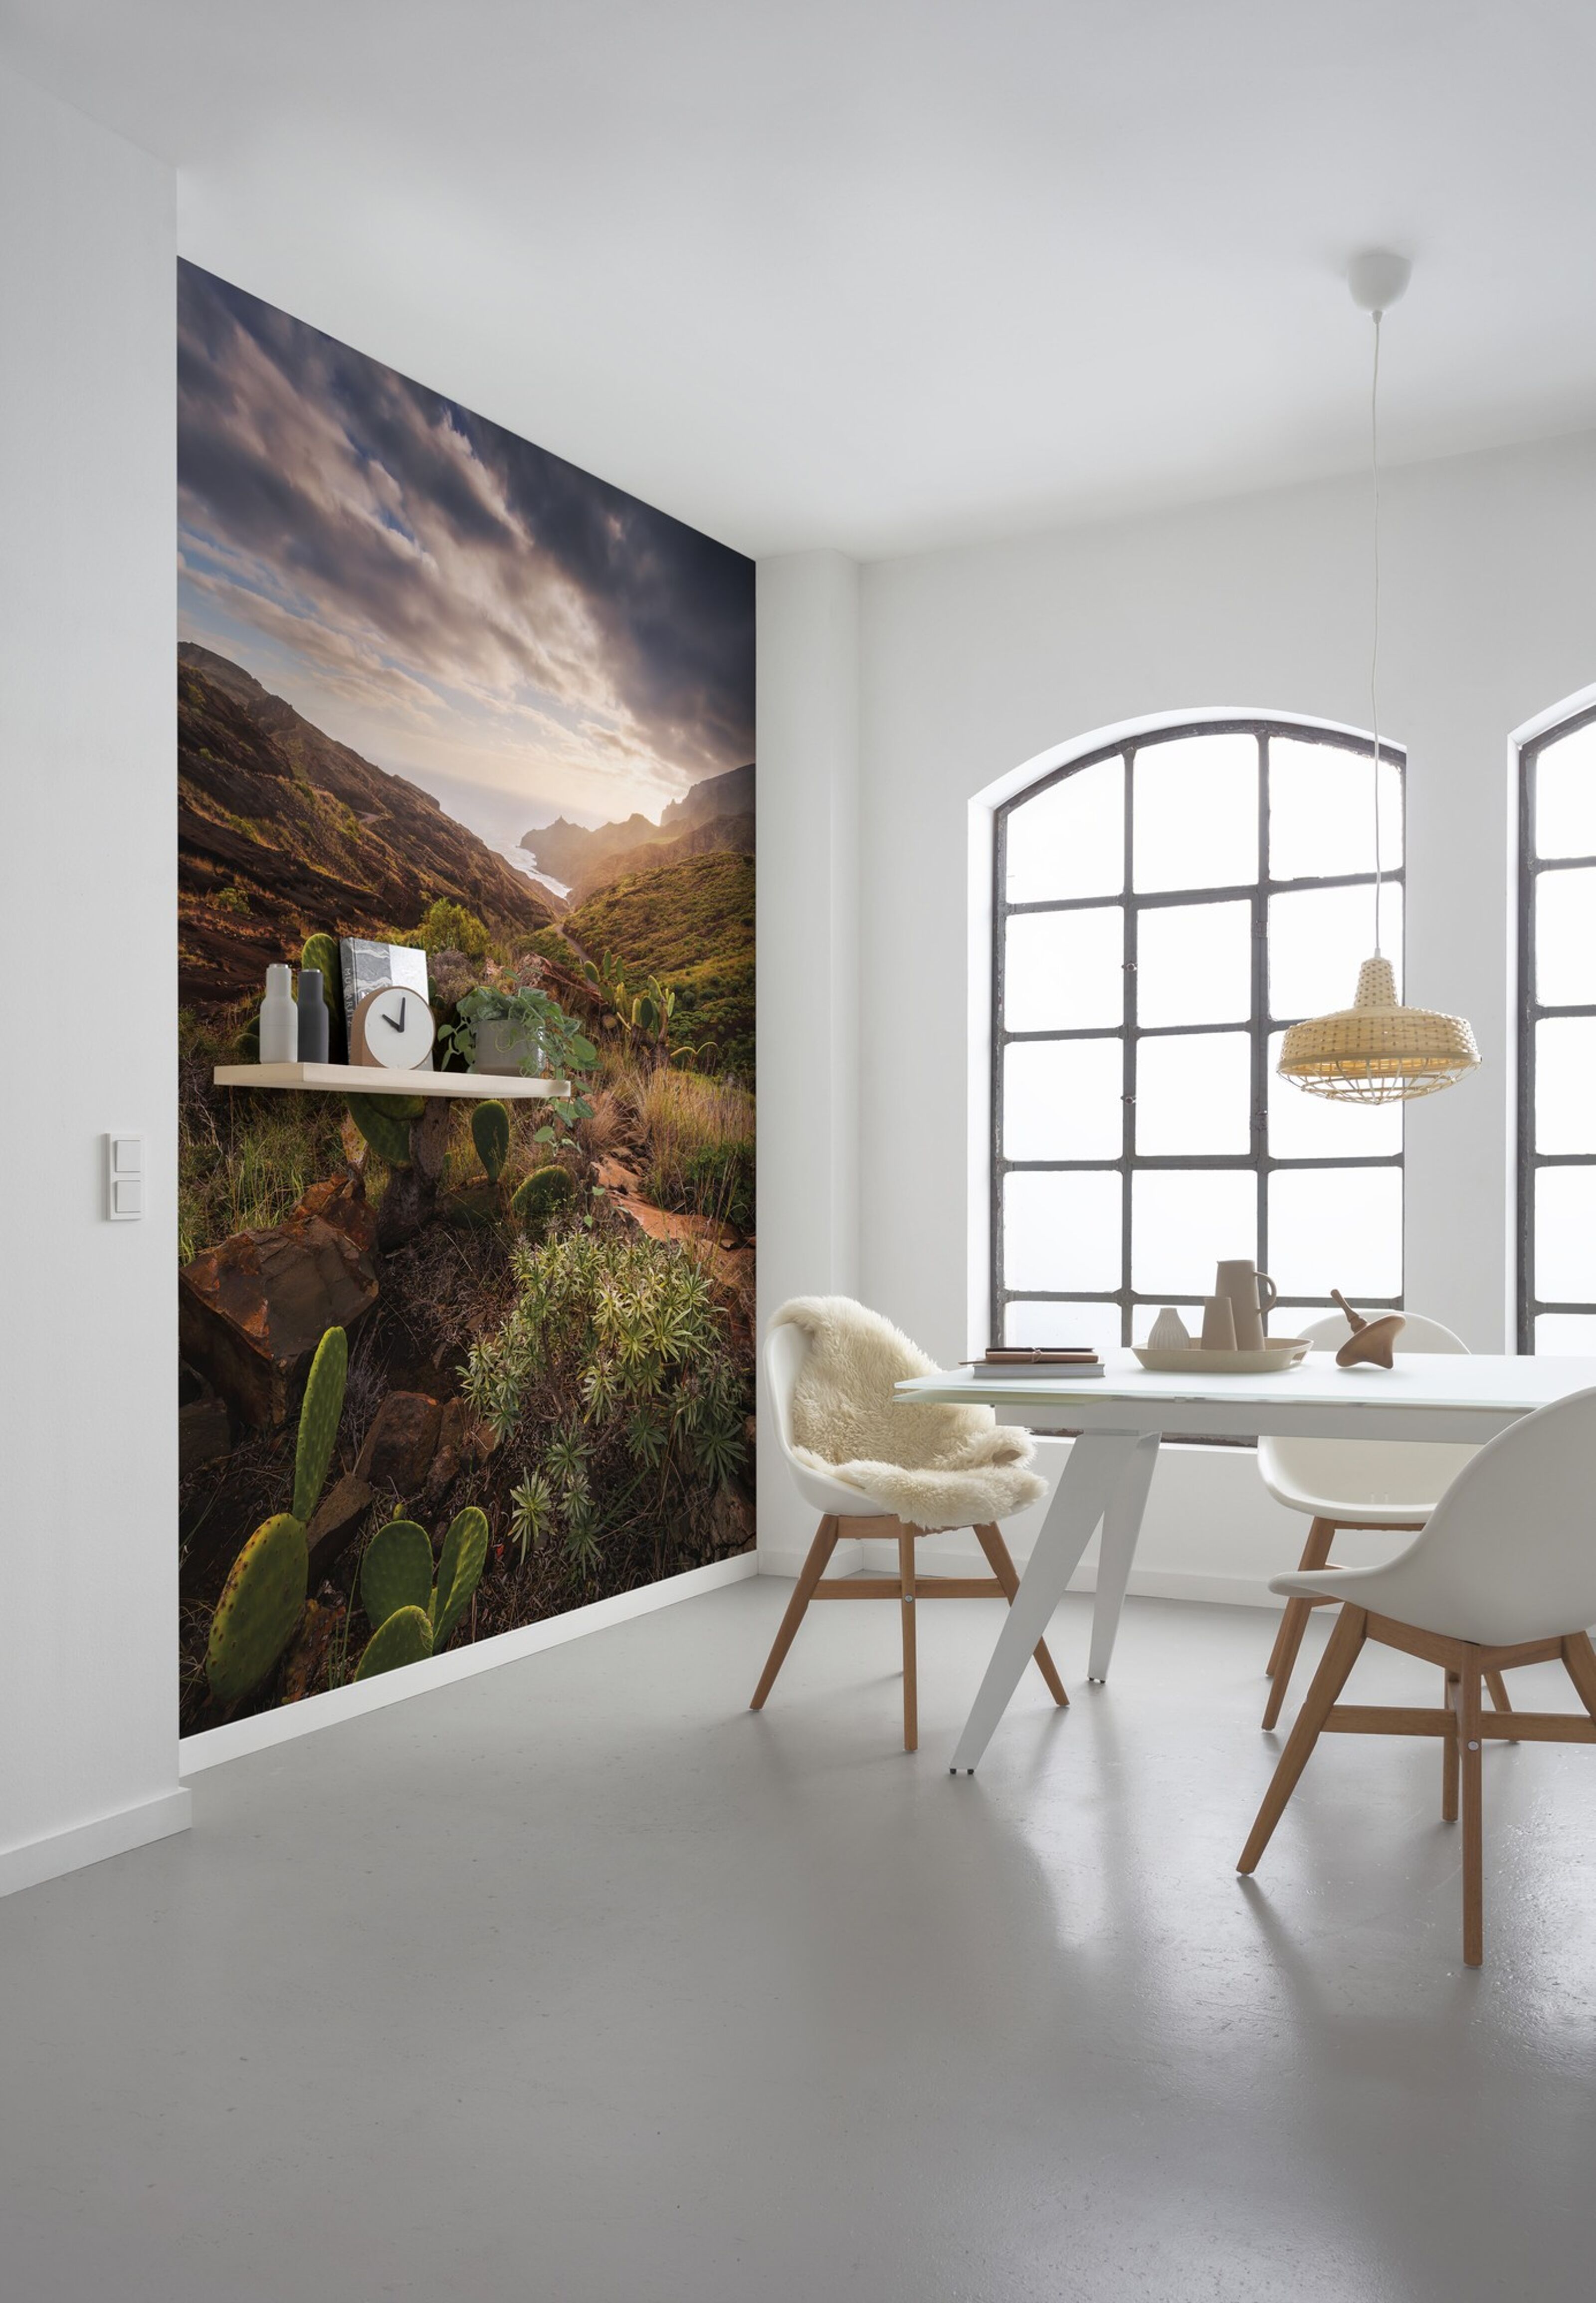 Buy wholesale wallpaper x 200 cm Non-woven light - warm - photo size 280